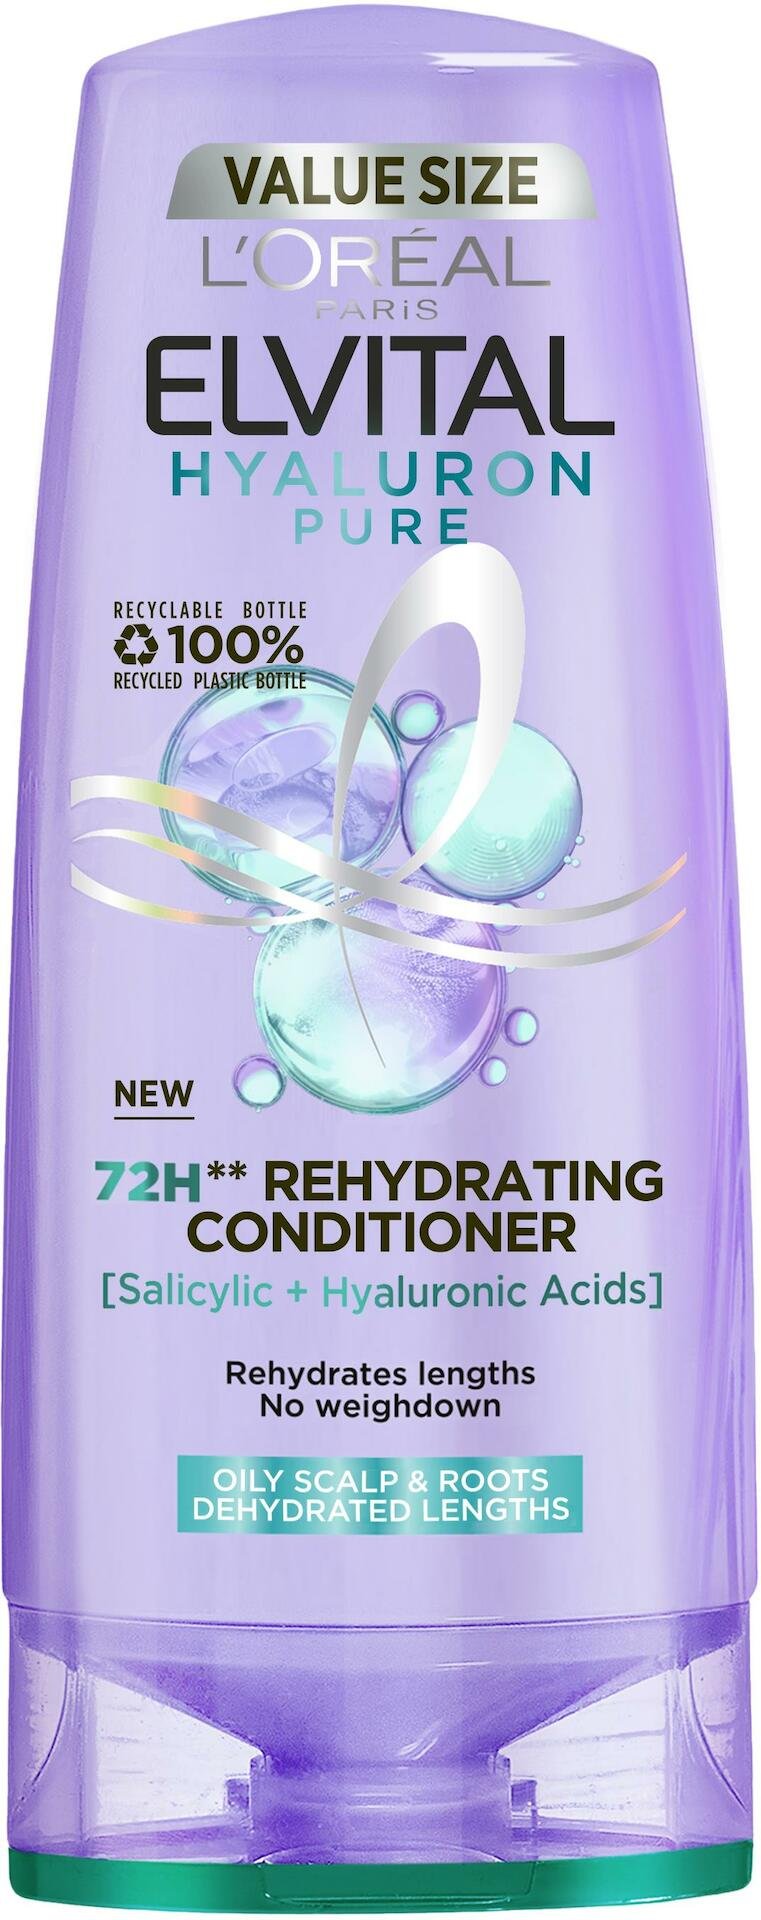 L'Oréal Paris Elvital Hyaluron Pure Rehydrating Conditioner 200 ml